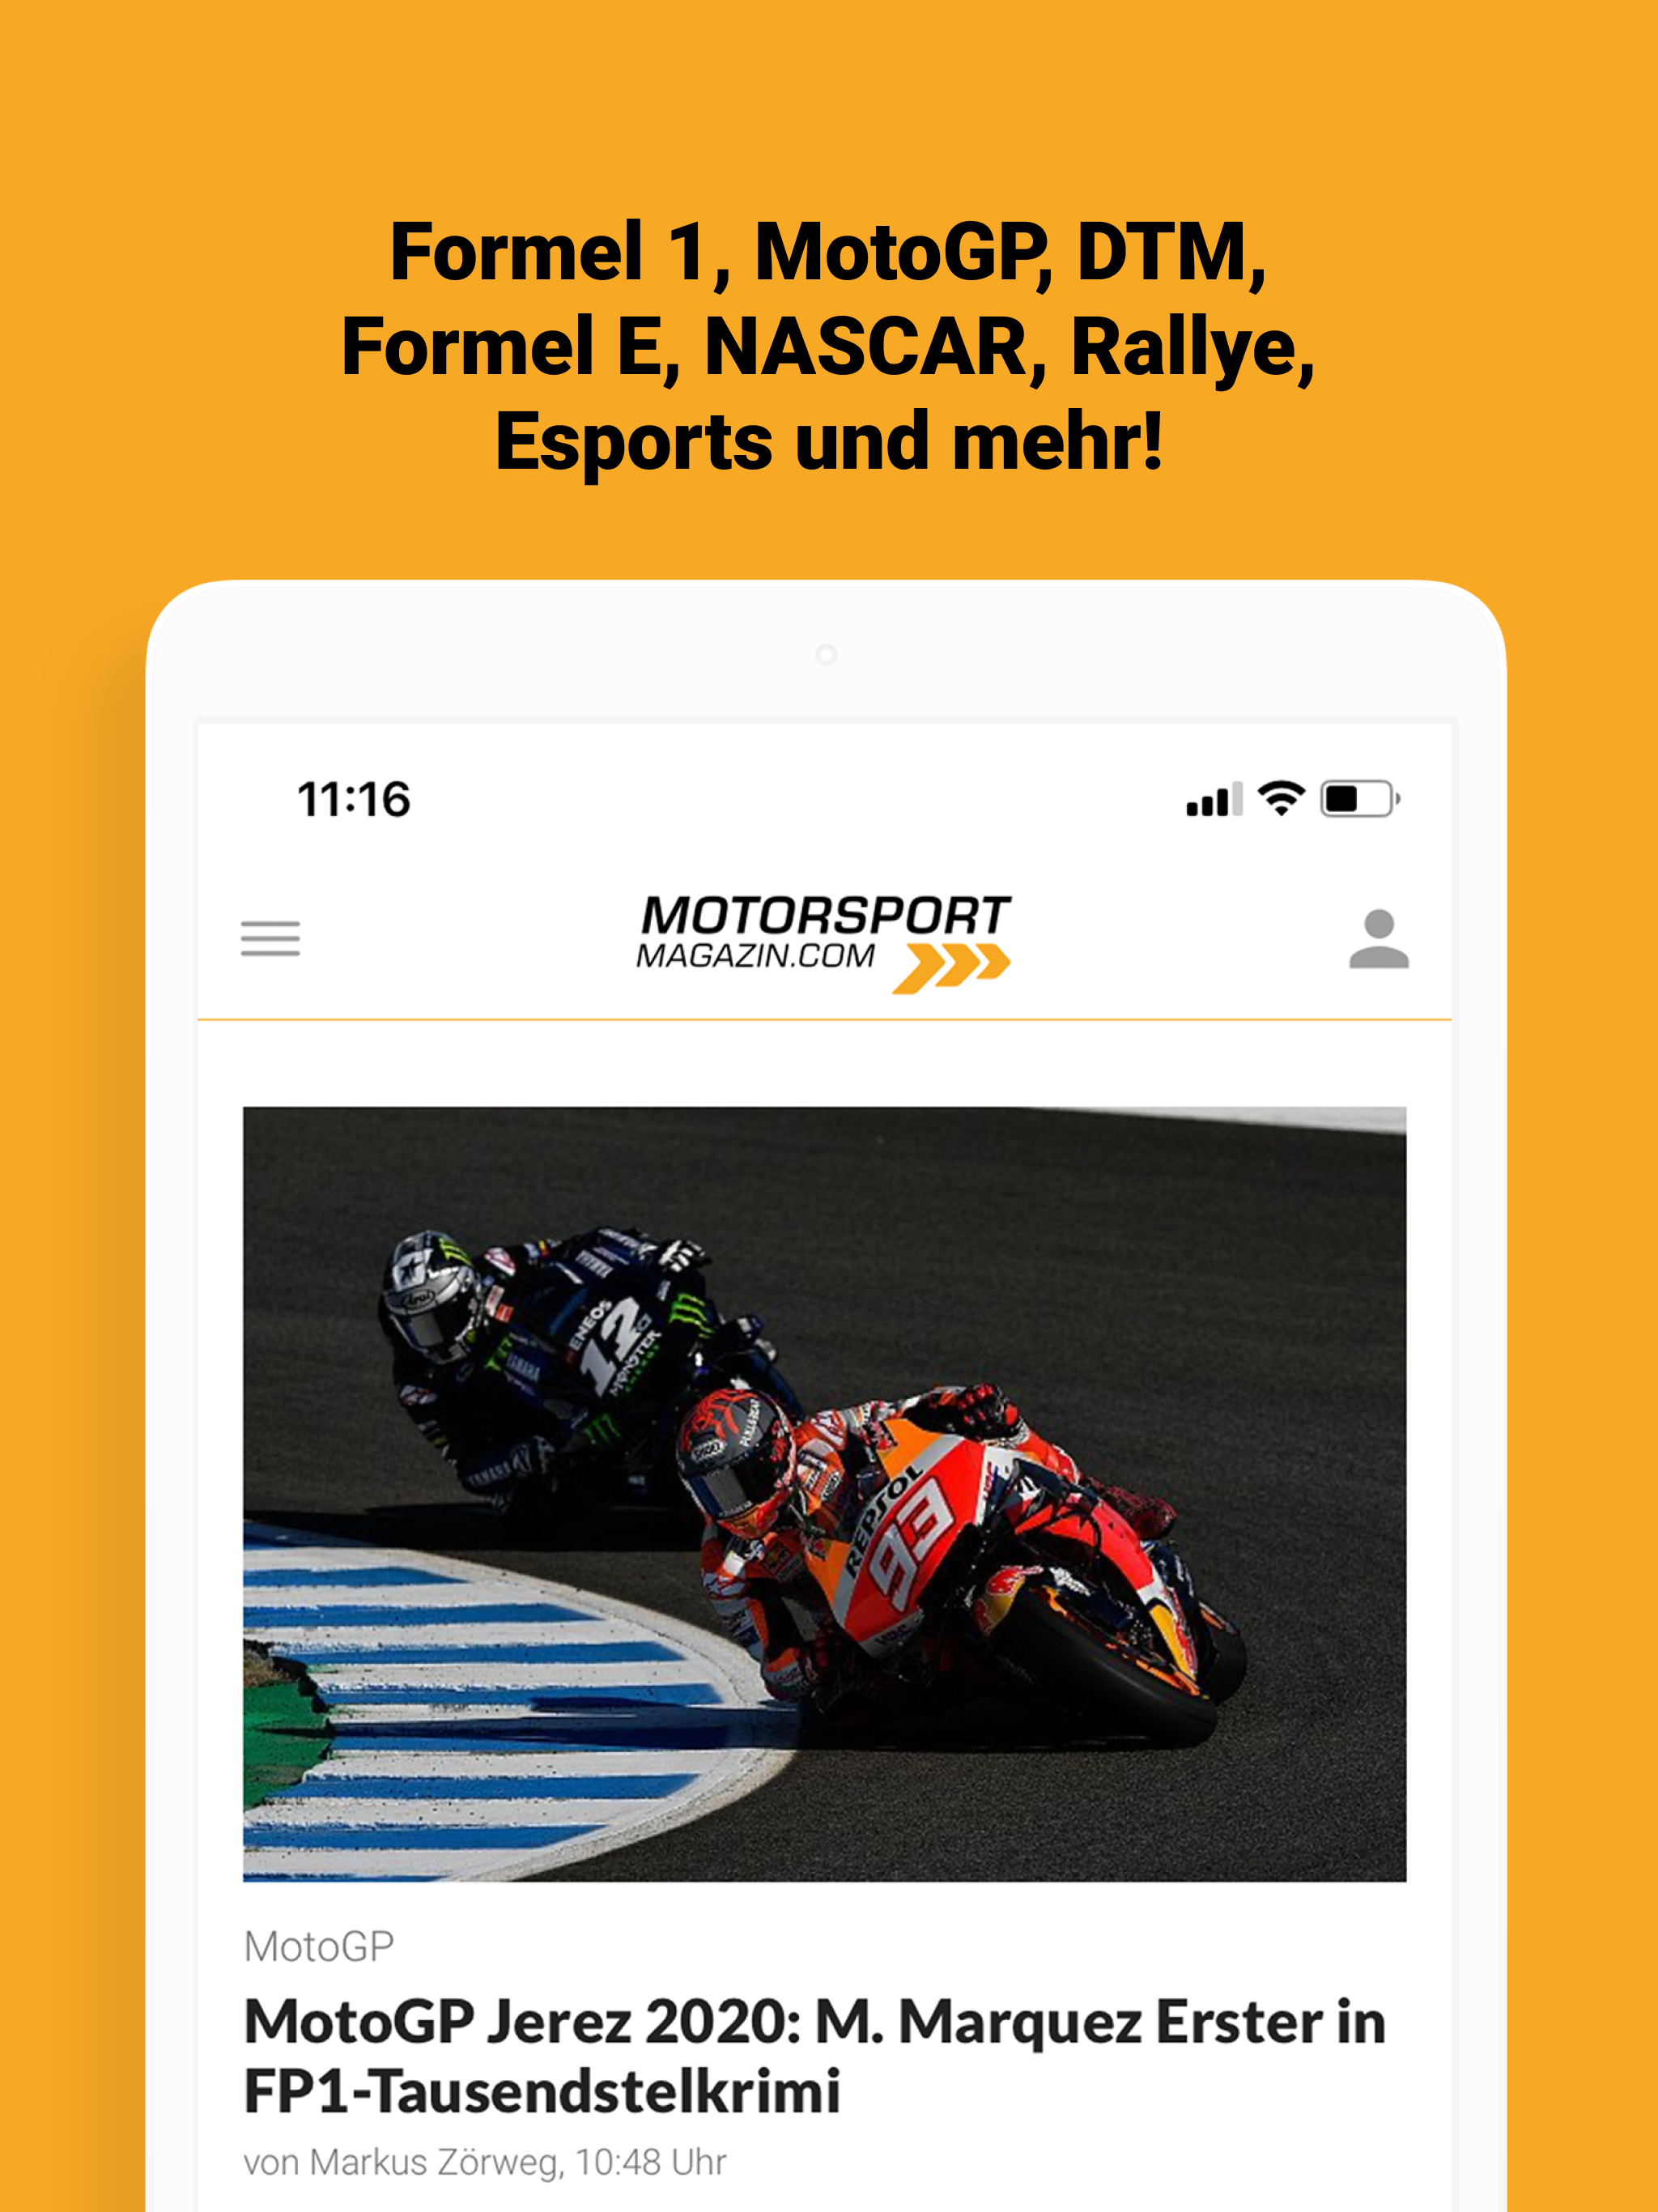 Motorsport Magazin: F1, MotoGP APK 4.9.0 for Android – Download Motorsport  Magazin: F1, MotoGP XAPK (APK Bundle) Latest Version from APKFab.com